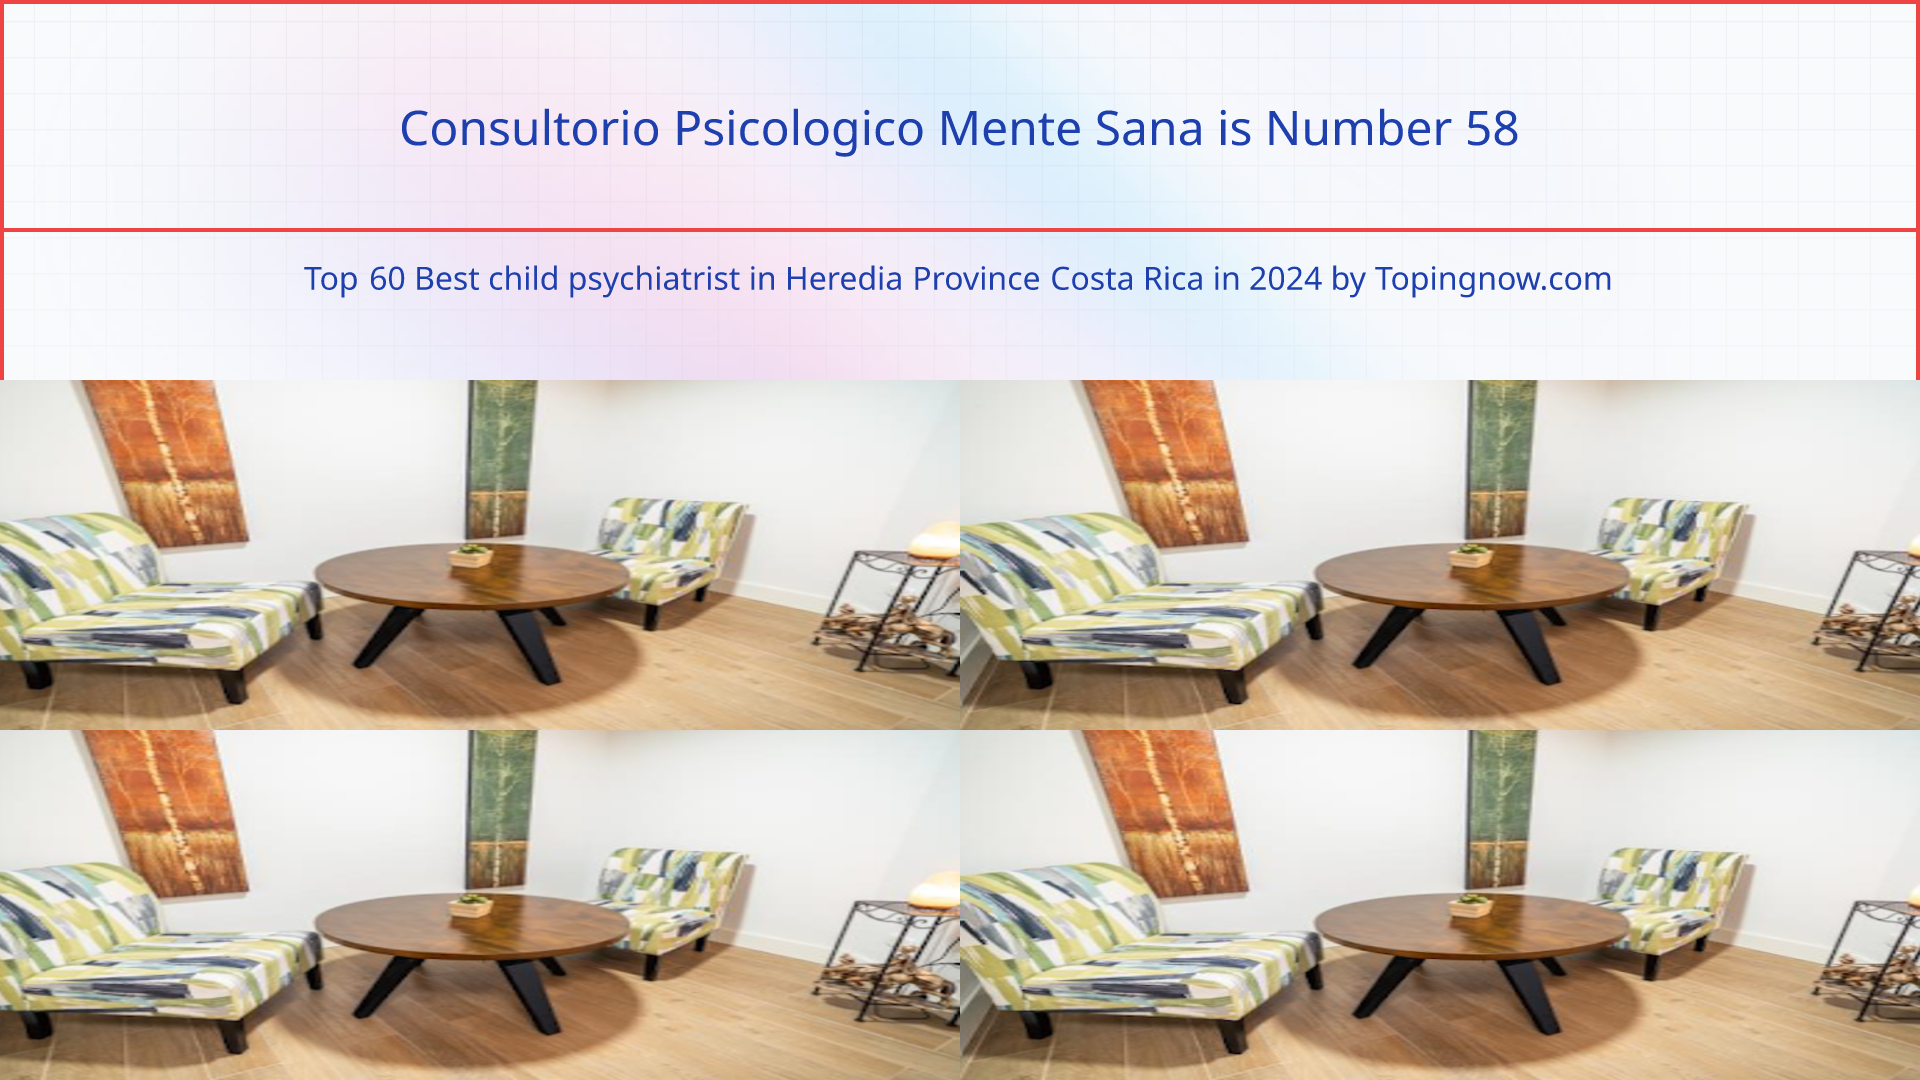 Consultorio Psicologico Mente Sana: Top 60 Best child psychiatrist in Heredia Province Costa Rica in 2024